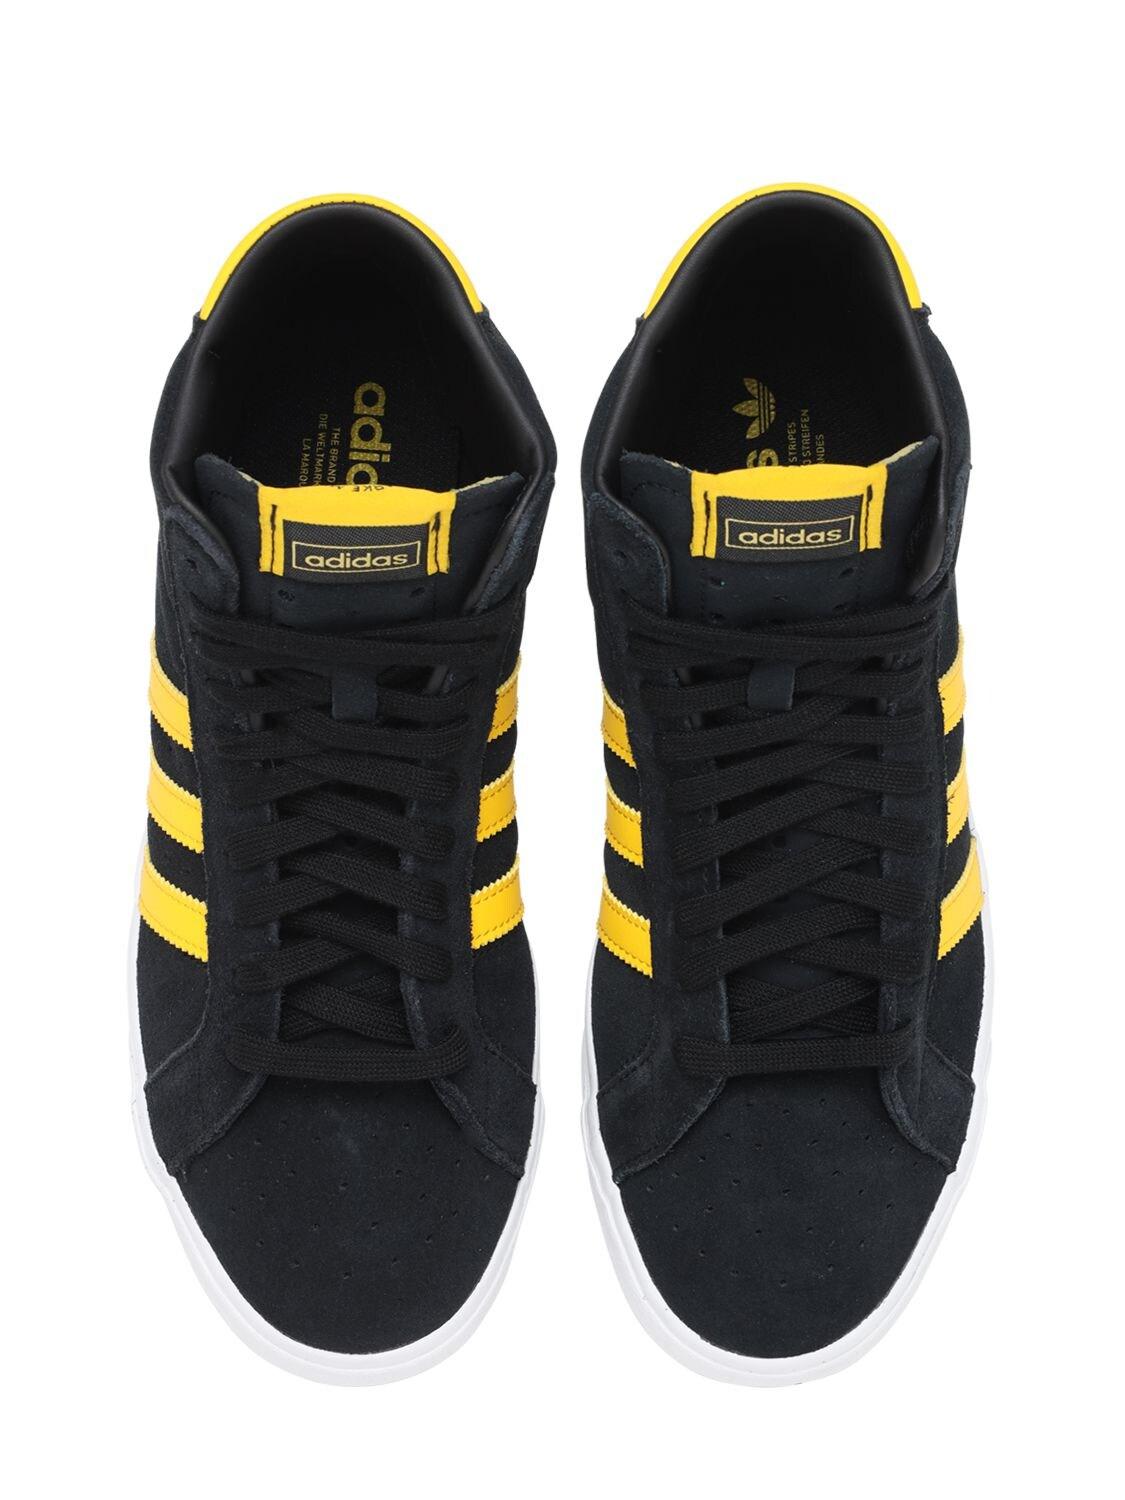 adidas Originals Suede /yellow Basket Profi Sneakers in Black/Gold (Black)  for Men | Lyst